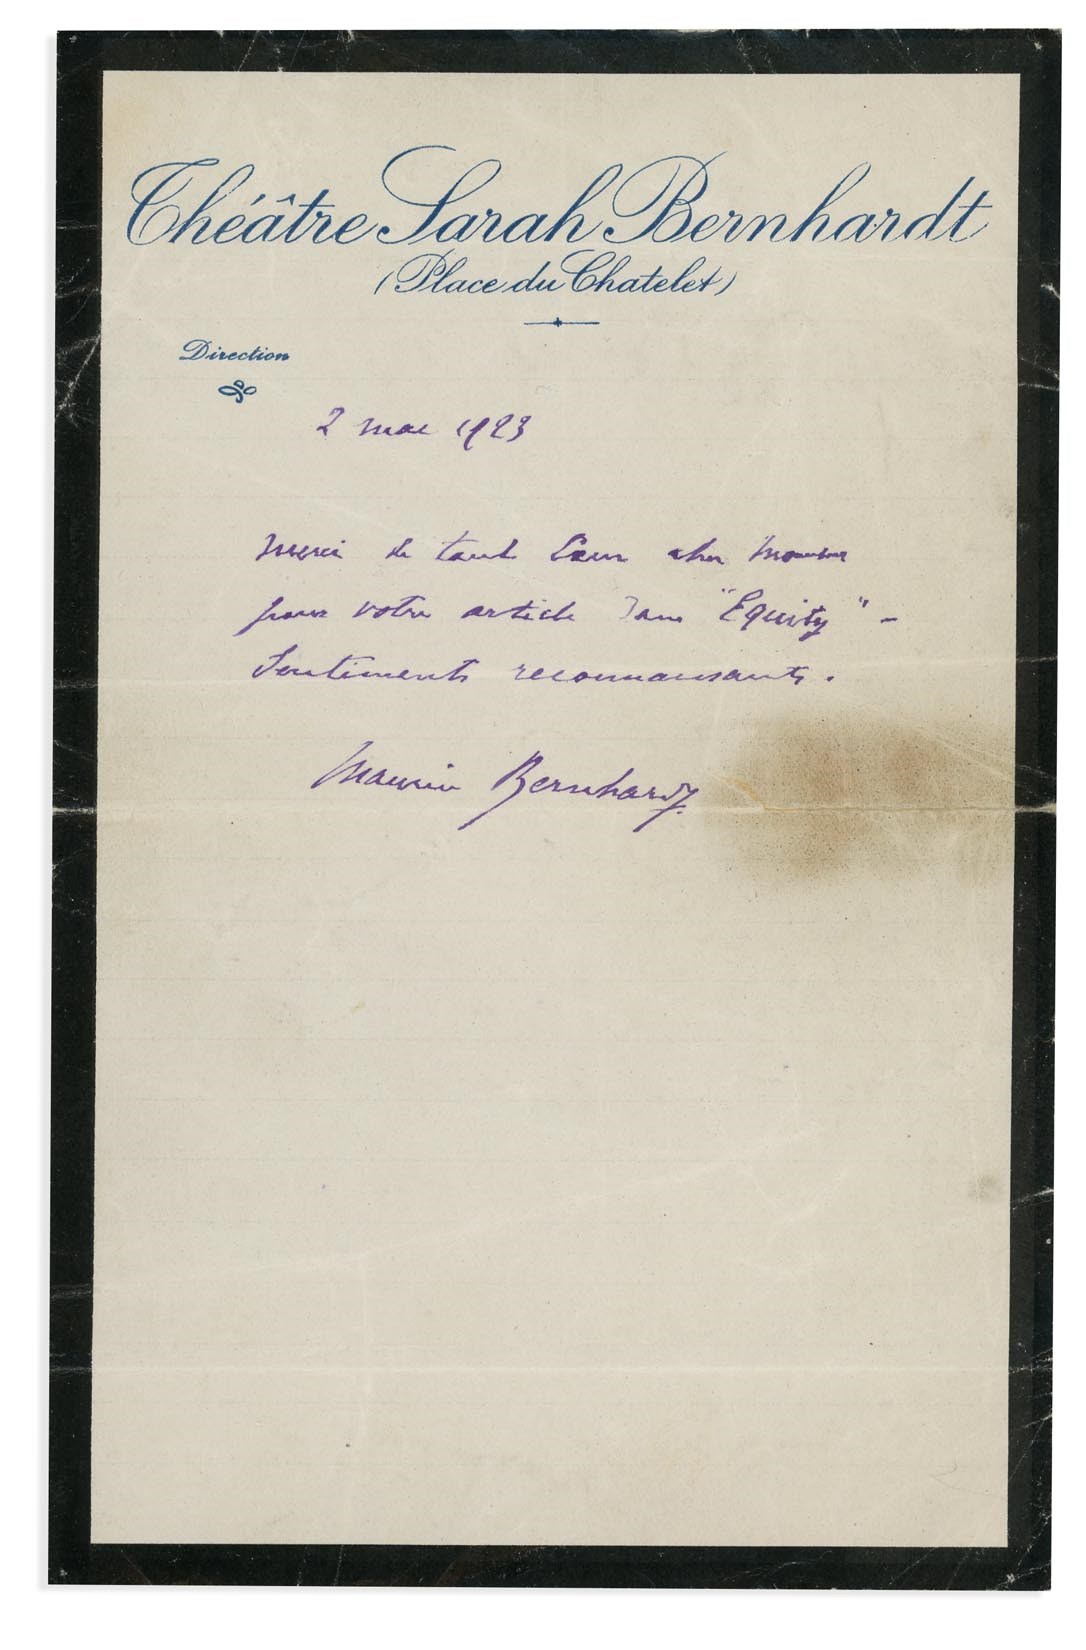 1923 Maurice Bernhardt ALS with Important Sarah Bernhardt Content